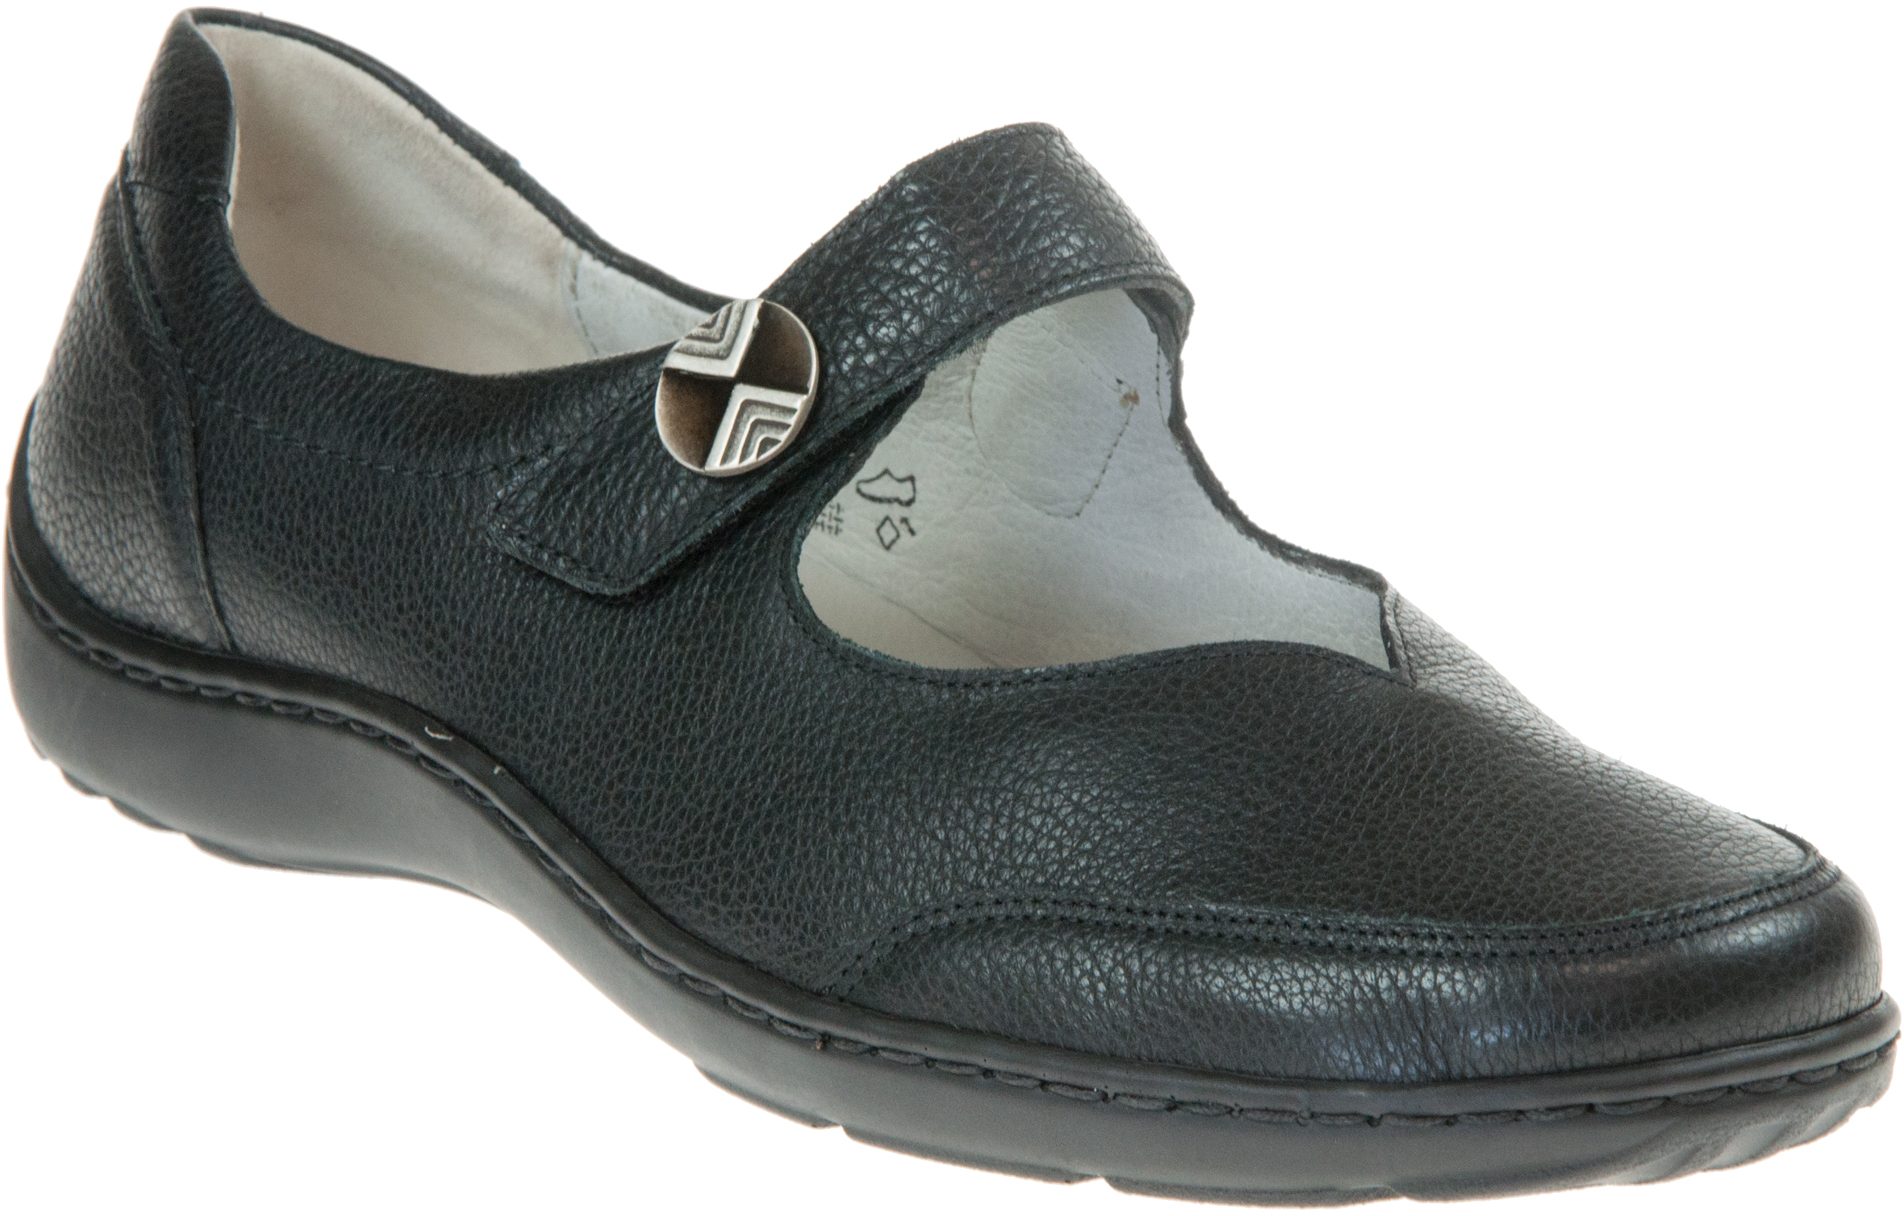 Waldlaufer Henni 315 Black Grain 496315 172 001 - Everyday Shoes ...